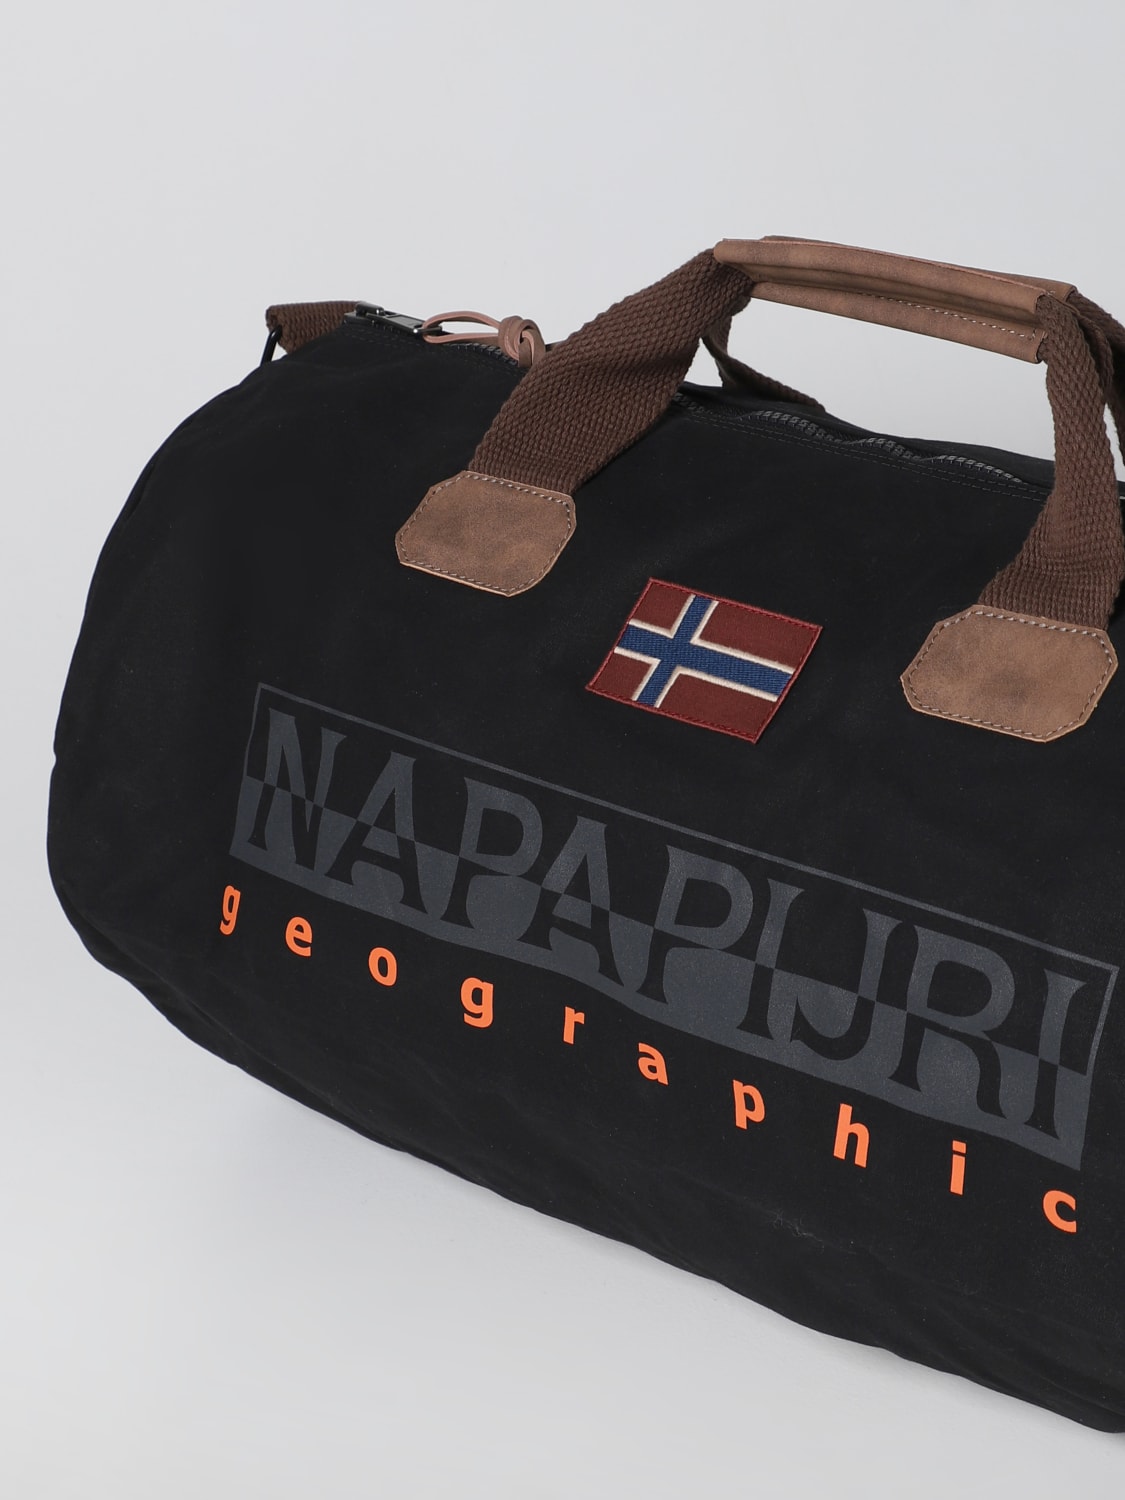 Groet Panter dichtheid NAPAPIJRI: travel bag for man - Black | Napapijri travel bag NP0A4GGM  online on GIGLIO.COM